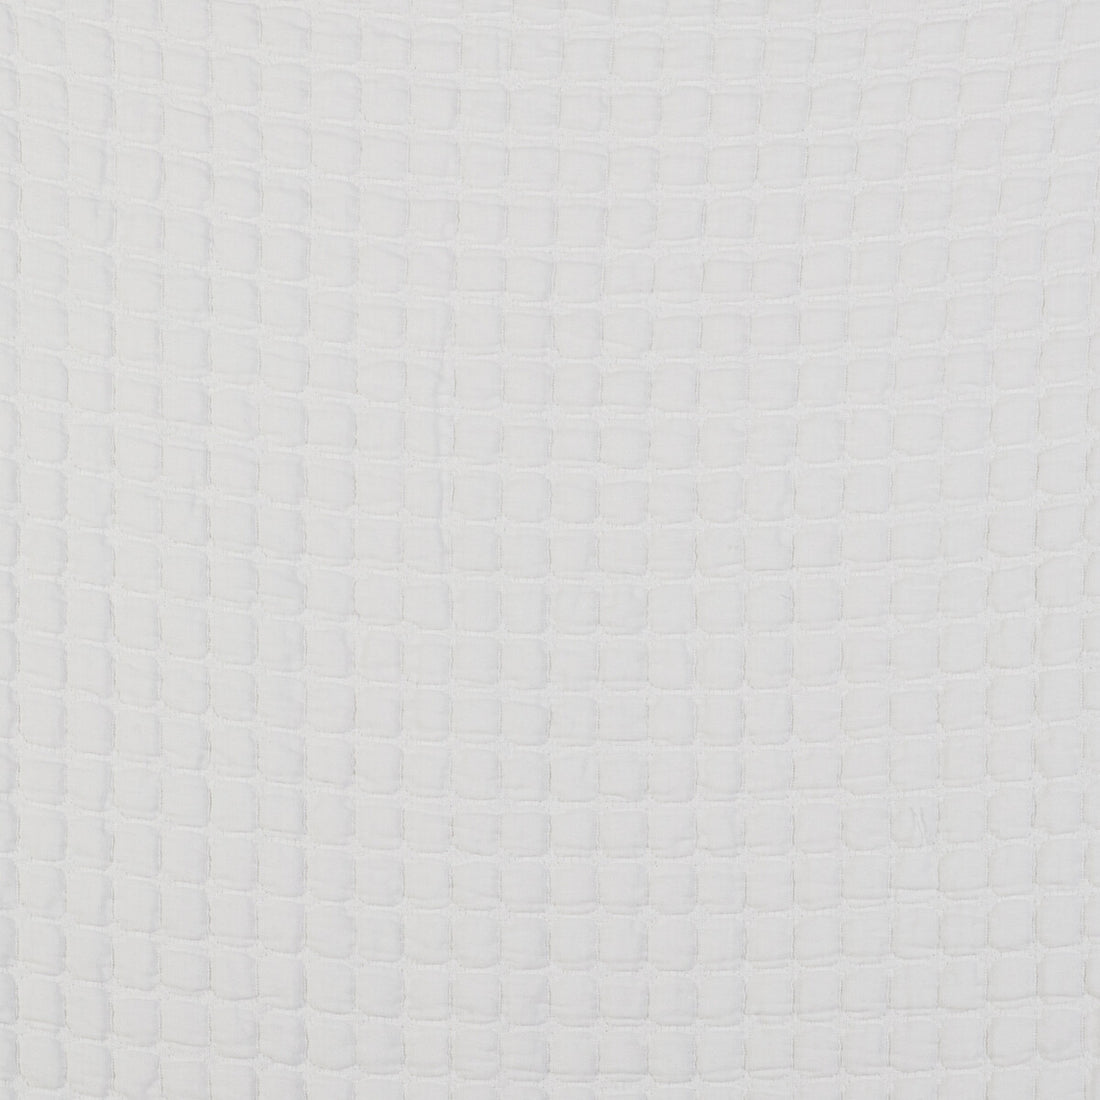 Morera fabric in blanco color - pattern GDT5523.001.0 - by Gaston y Daniela in the Gaston Libreria collection